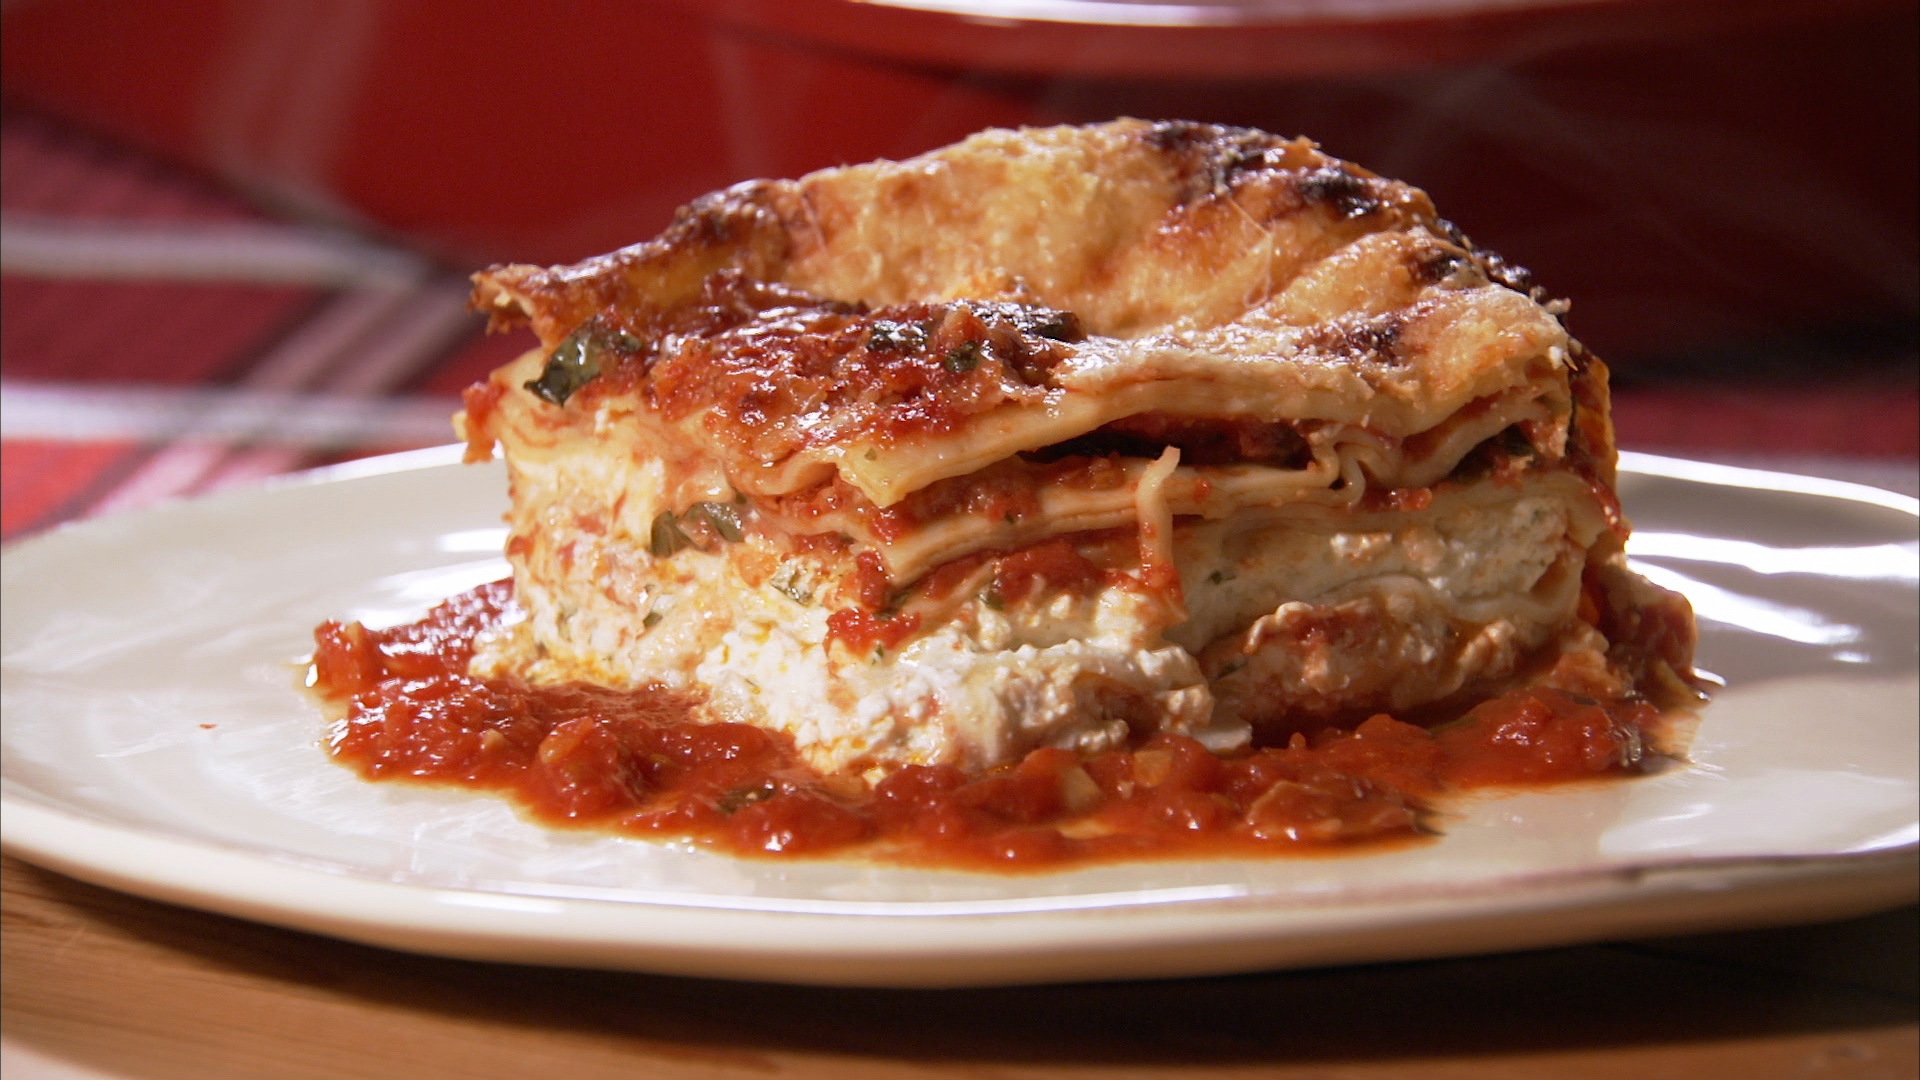 Lidia Bastianich's Italian-American Lasagna